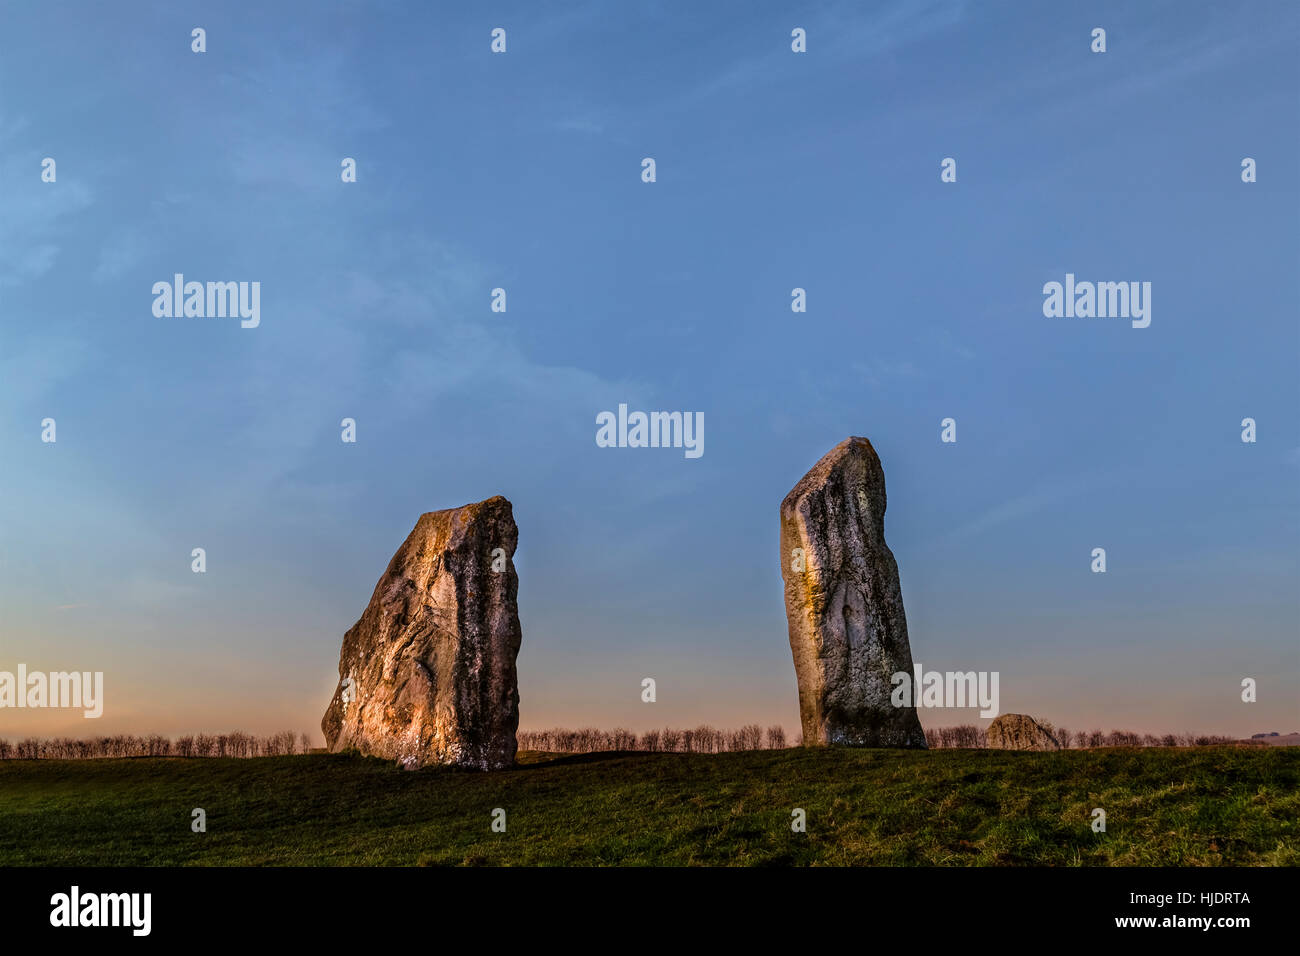 Bagues, Avebury Stone Circle, Wiltshire, England, UK Banque D'Images